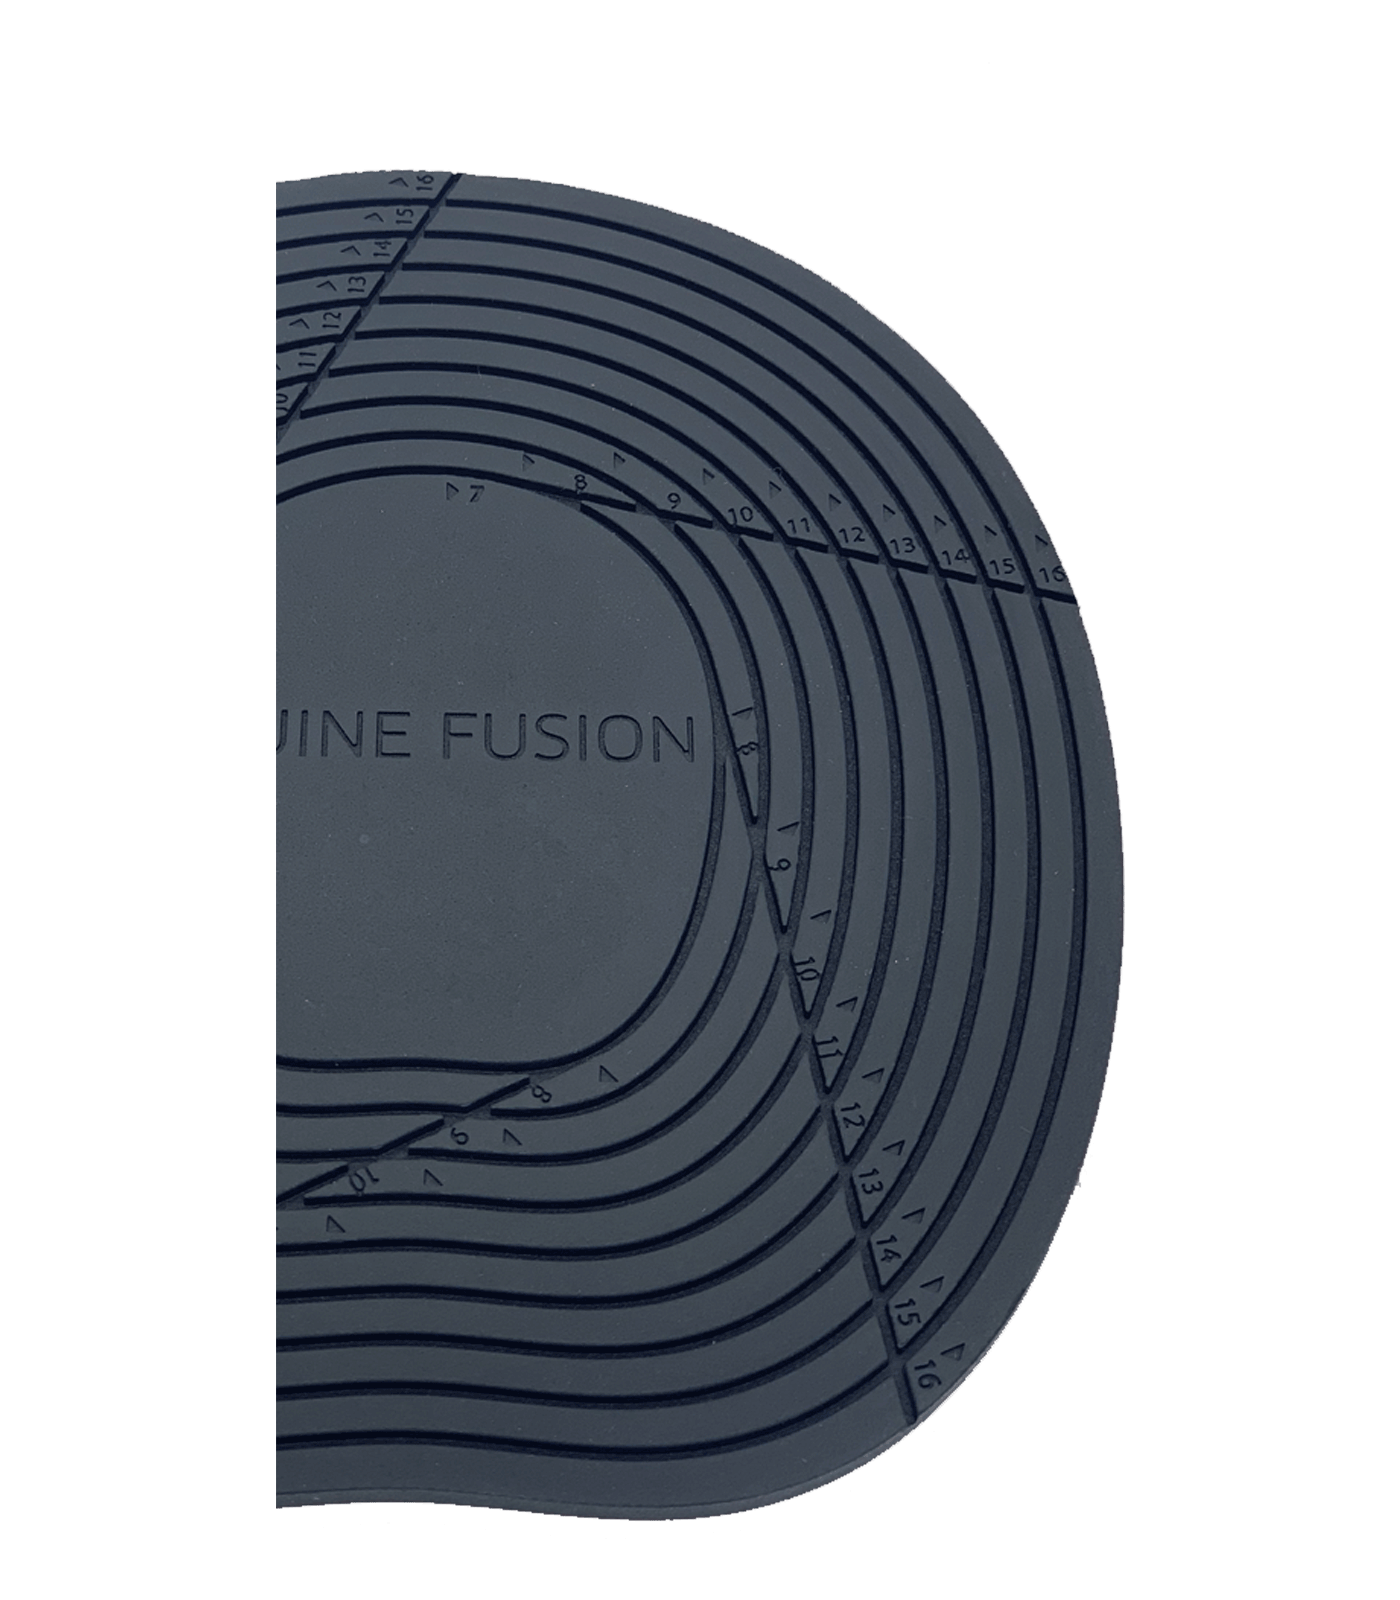 Equine Fusion Dampening Pad slim